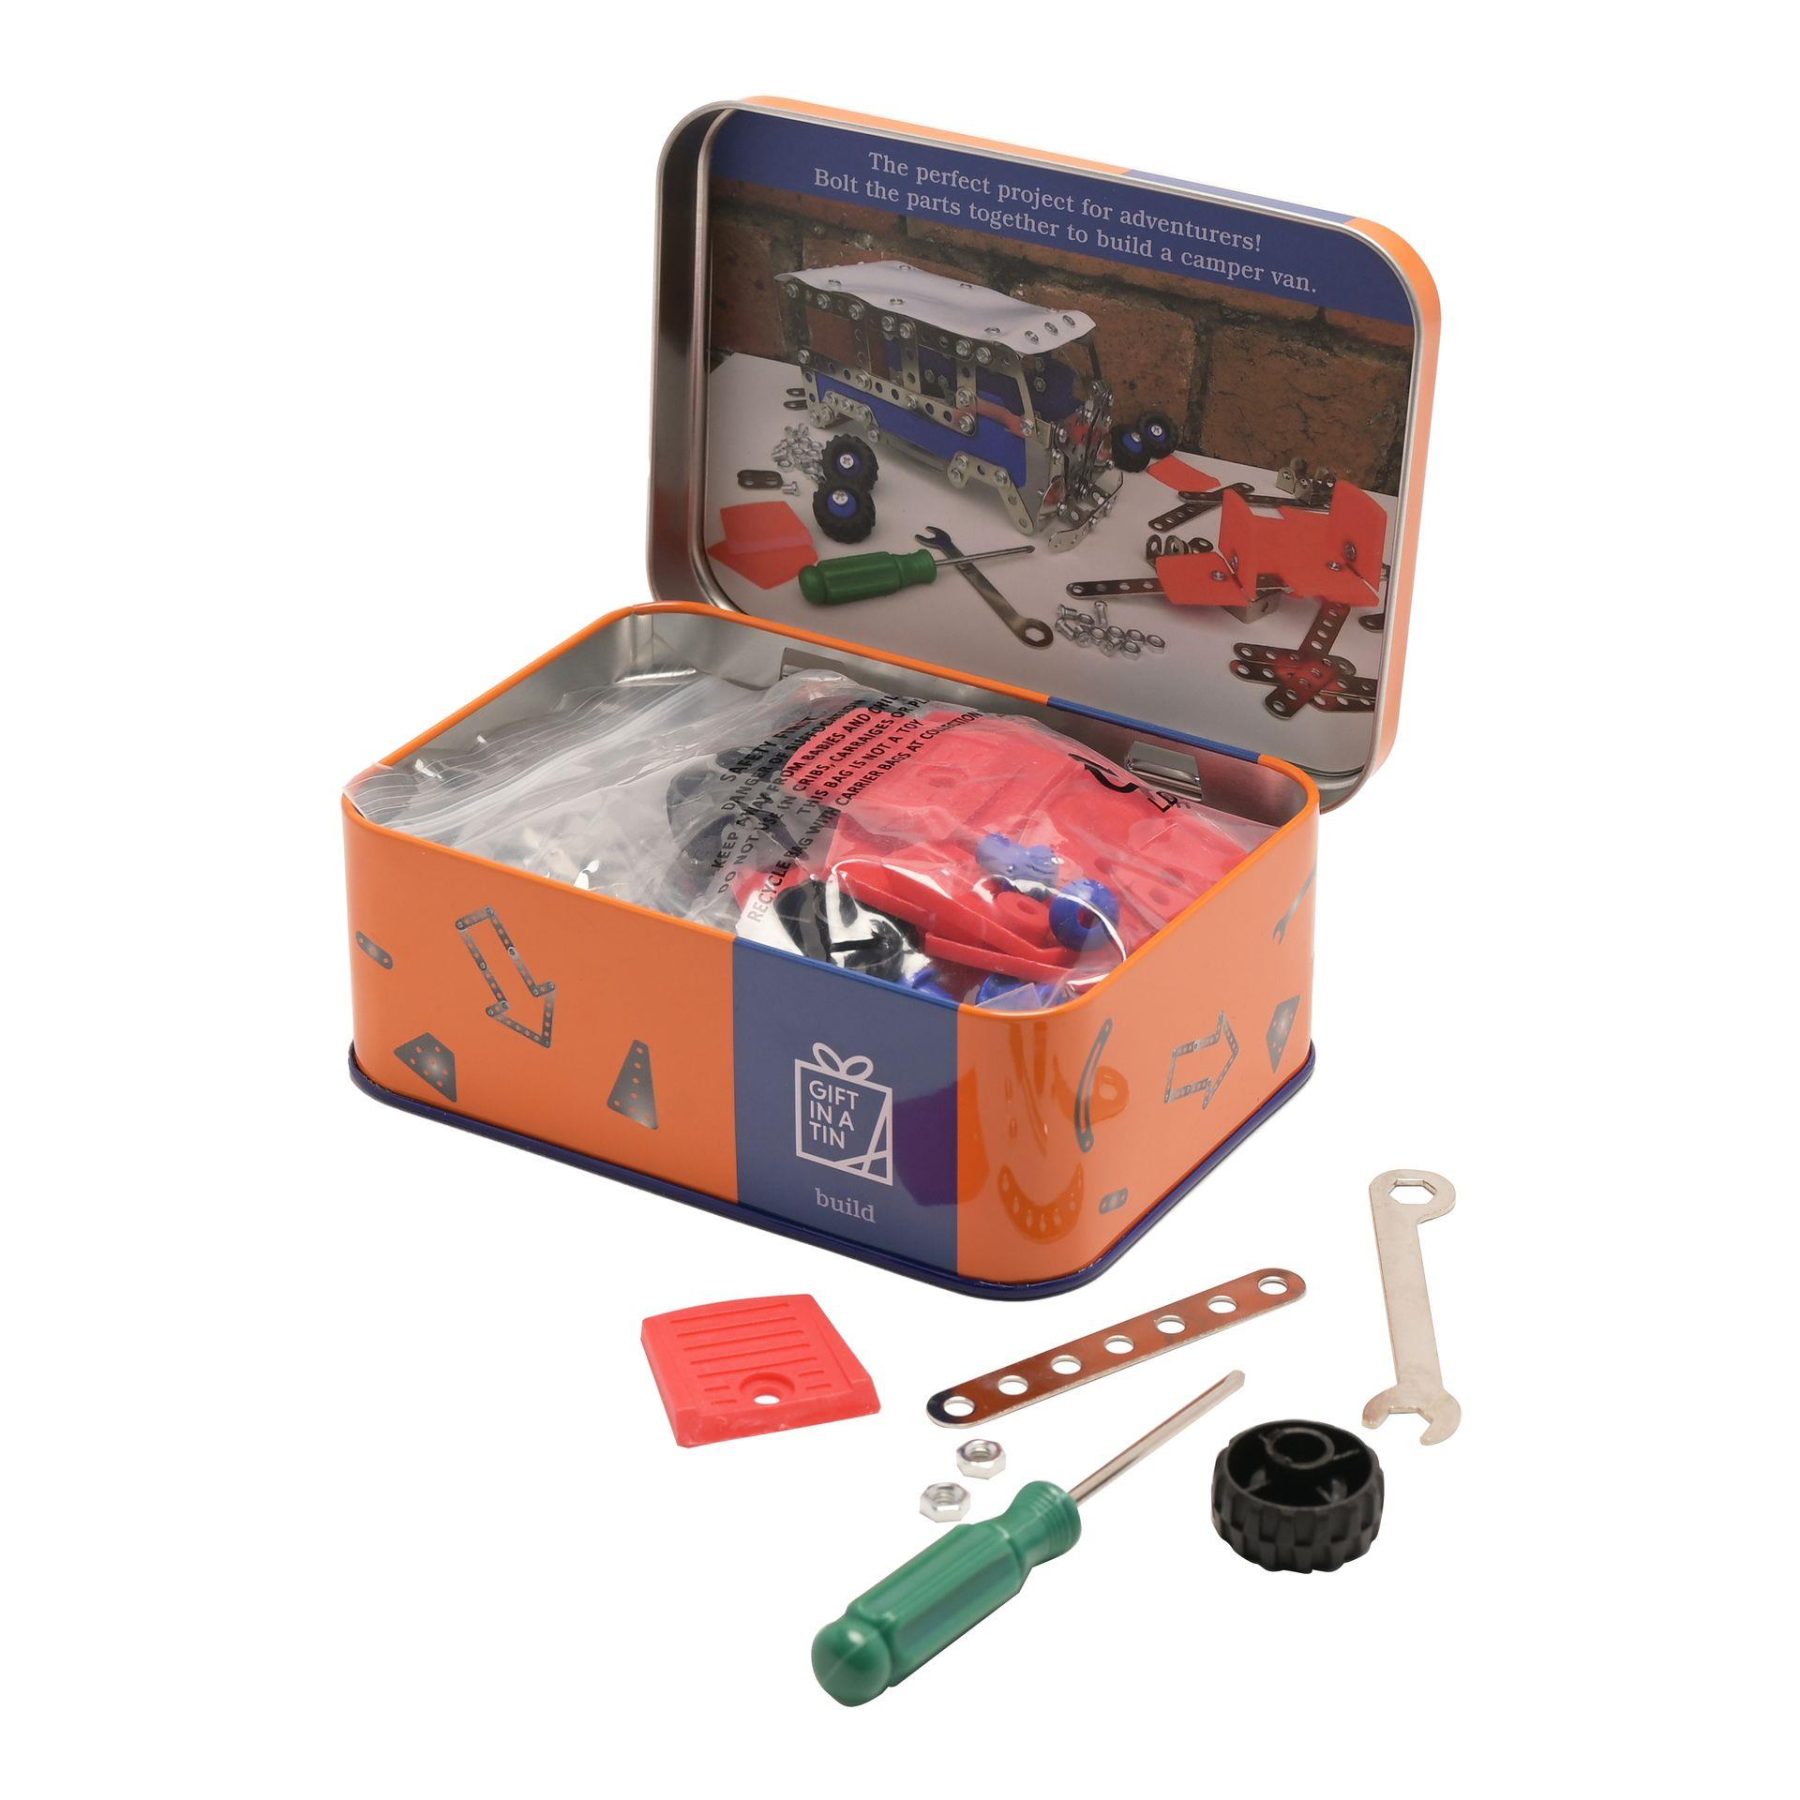 Gift in A Tin Craft / Activity Set Age 10+ - Camper Van